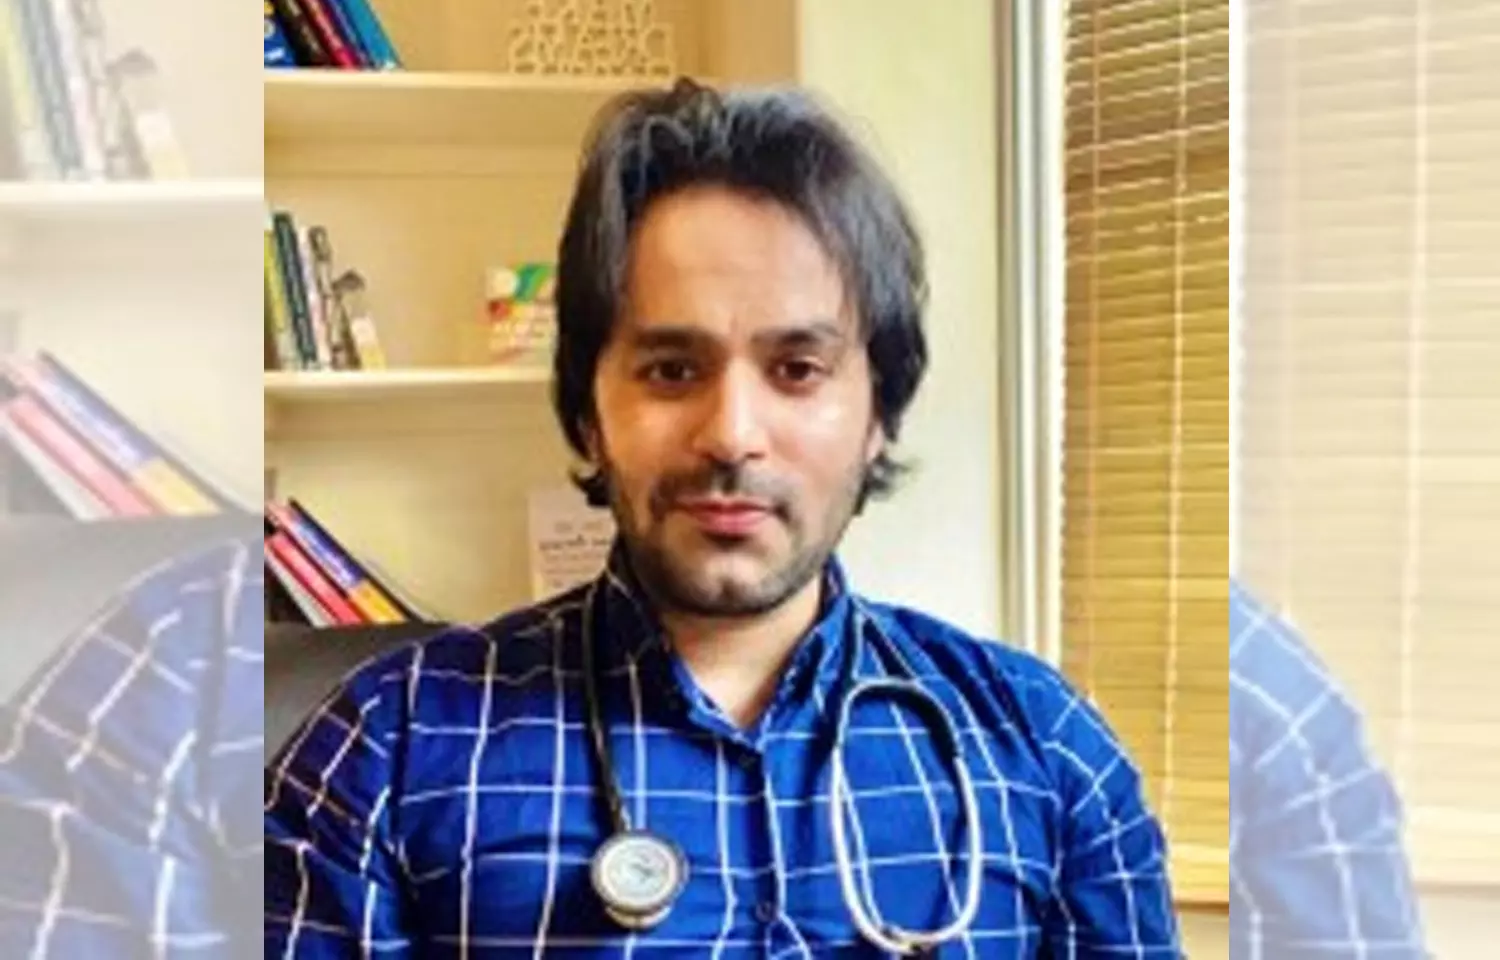 Kashmir based doctor bags RCPsychs Trainee Innovator Award